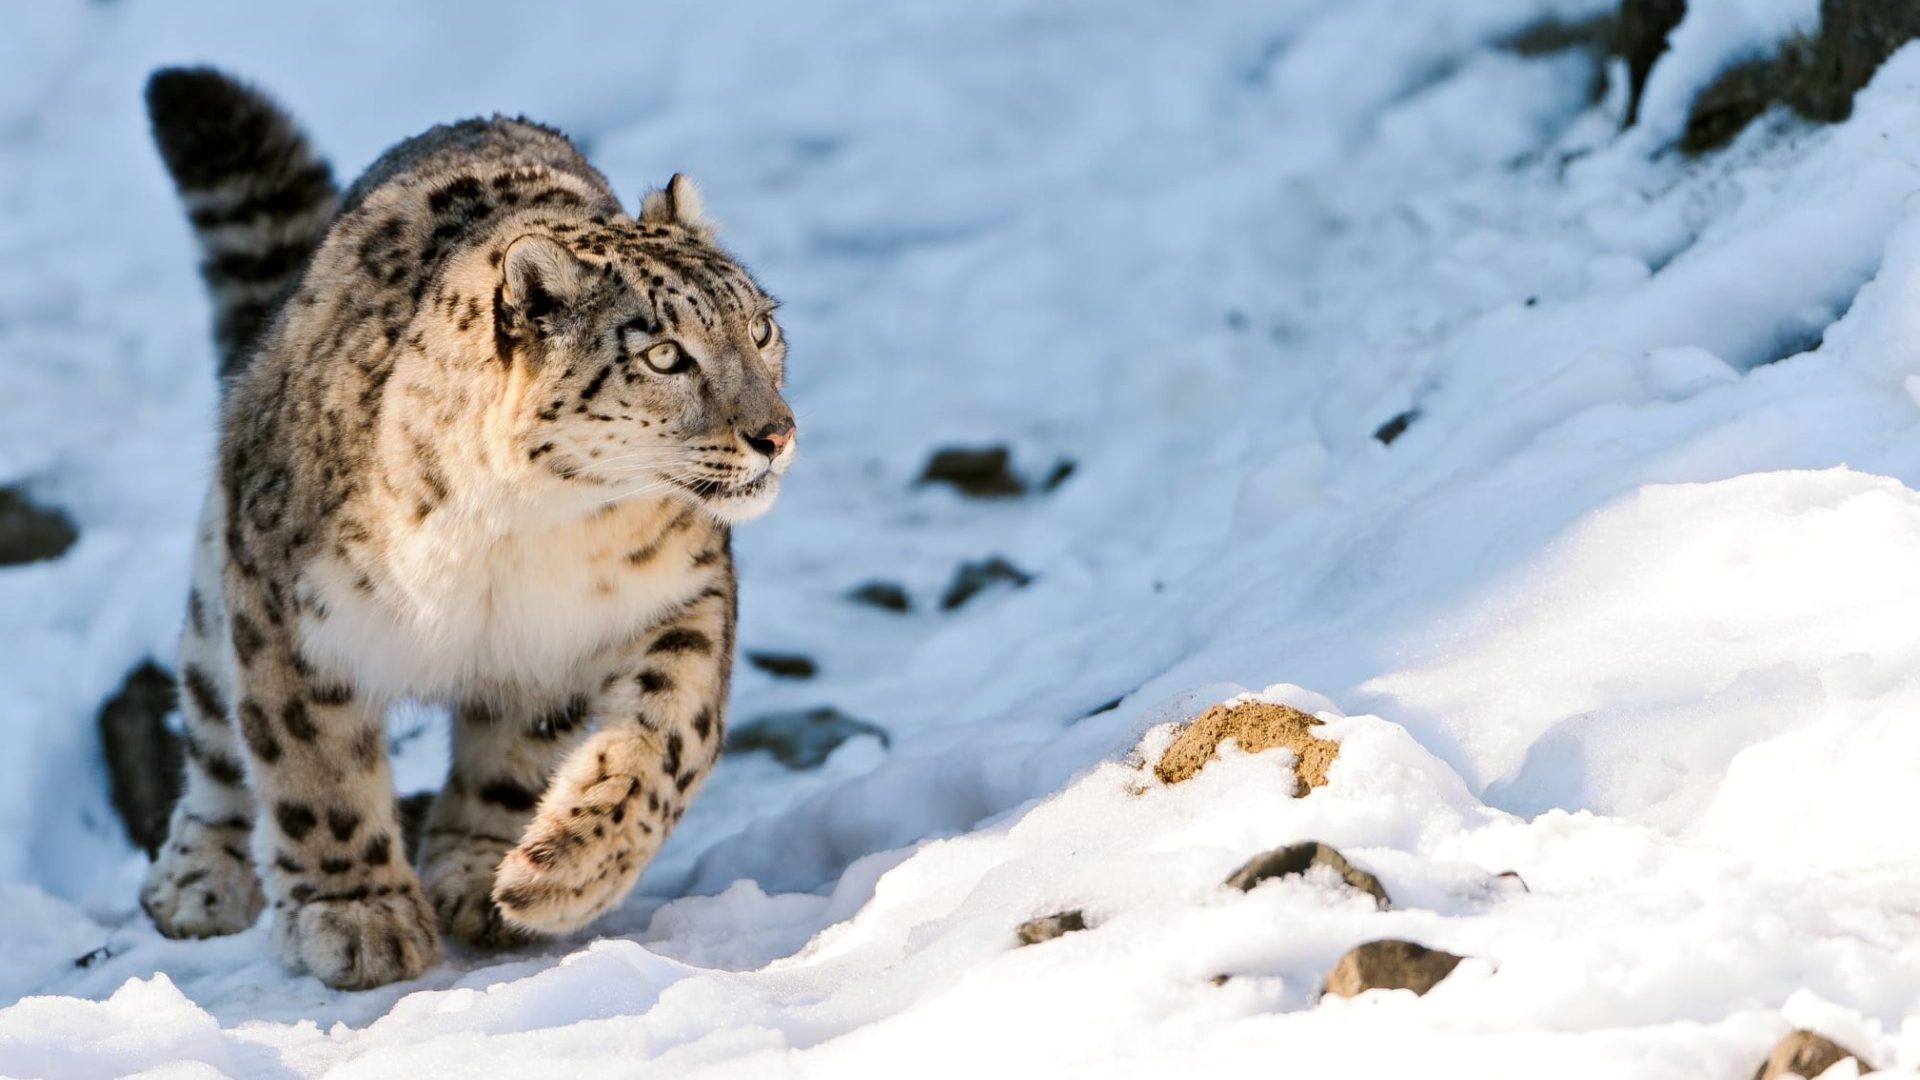 Snow_leopard_credit_tambako-flickr_CC-aspect-ratio-1920-1300